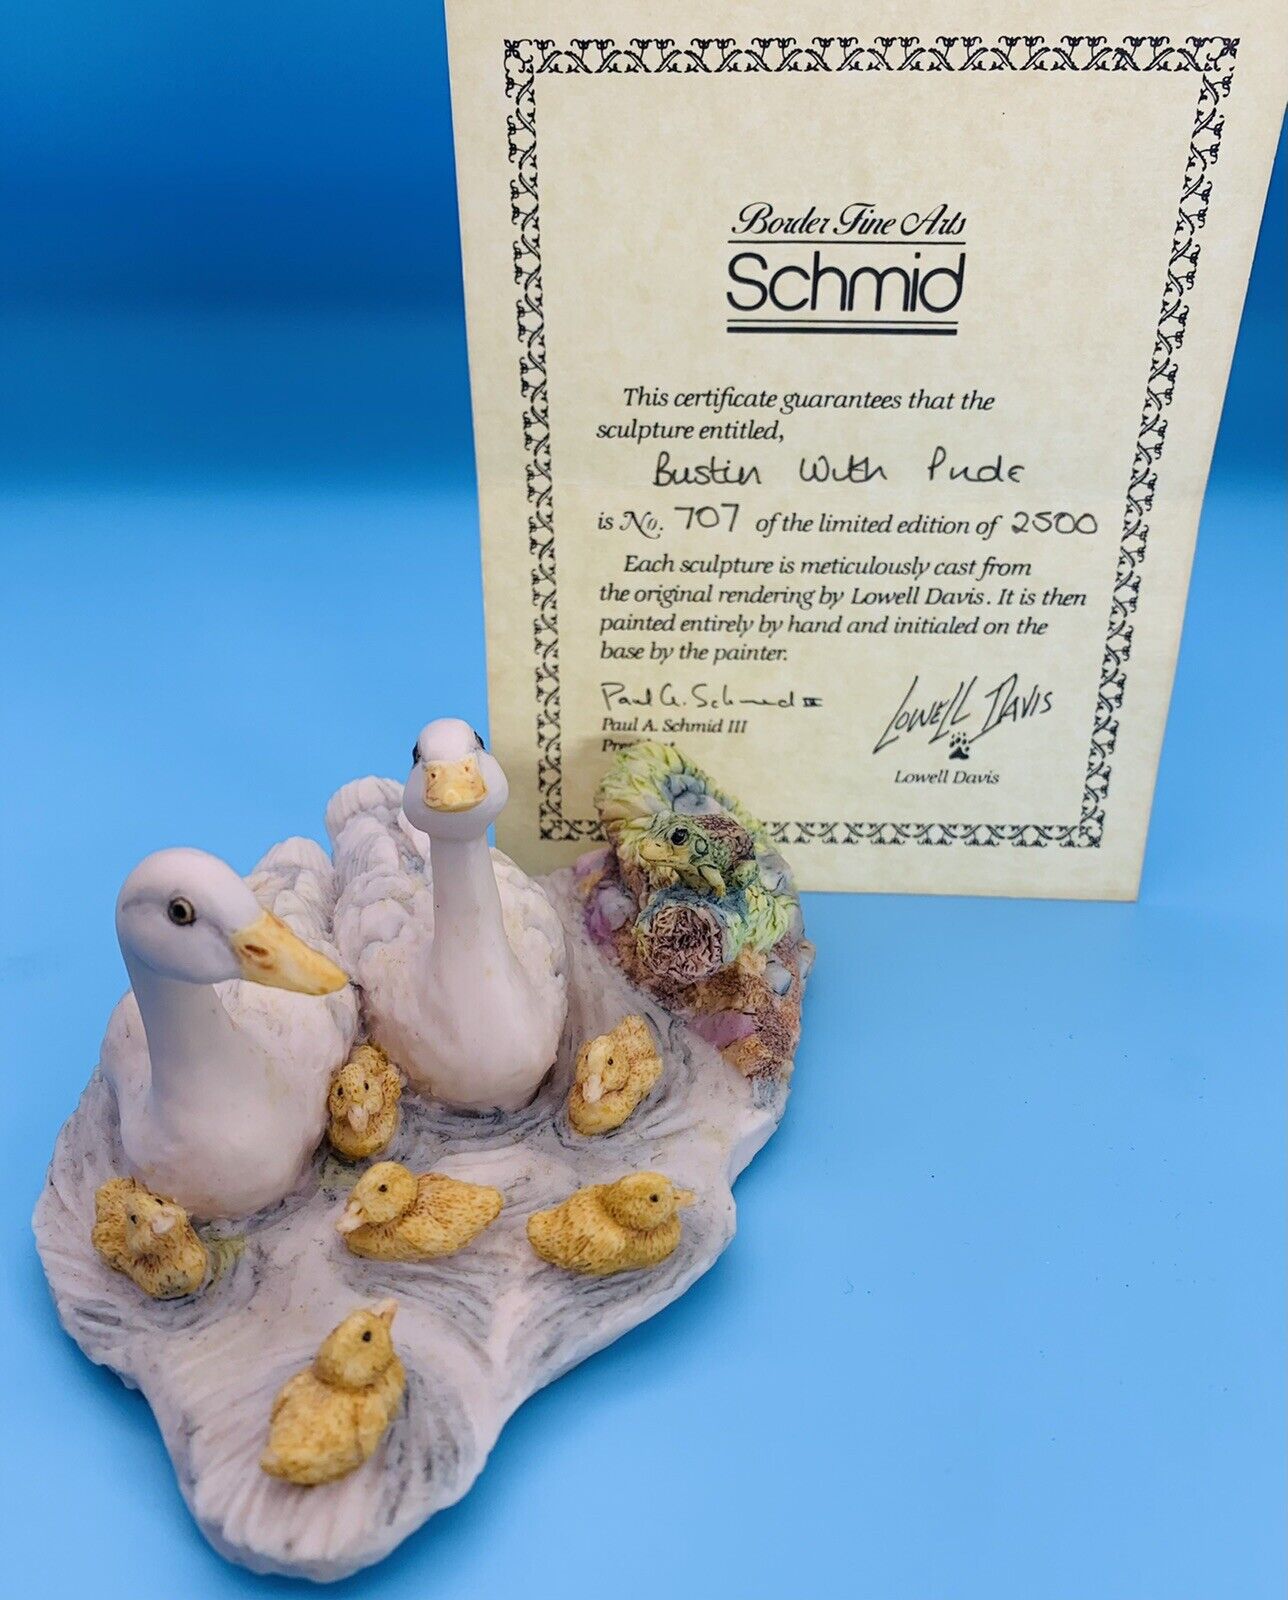 1981 Schmid Lowell Davis LTD Figurine #707 Duck’s Chicks Frog Bustin With Pride